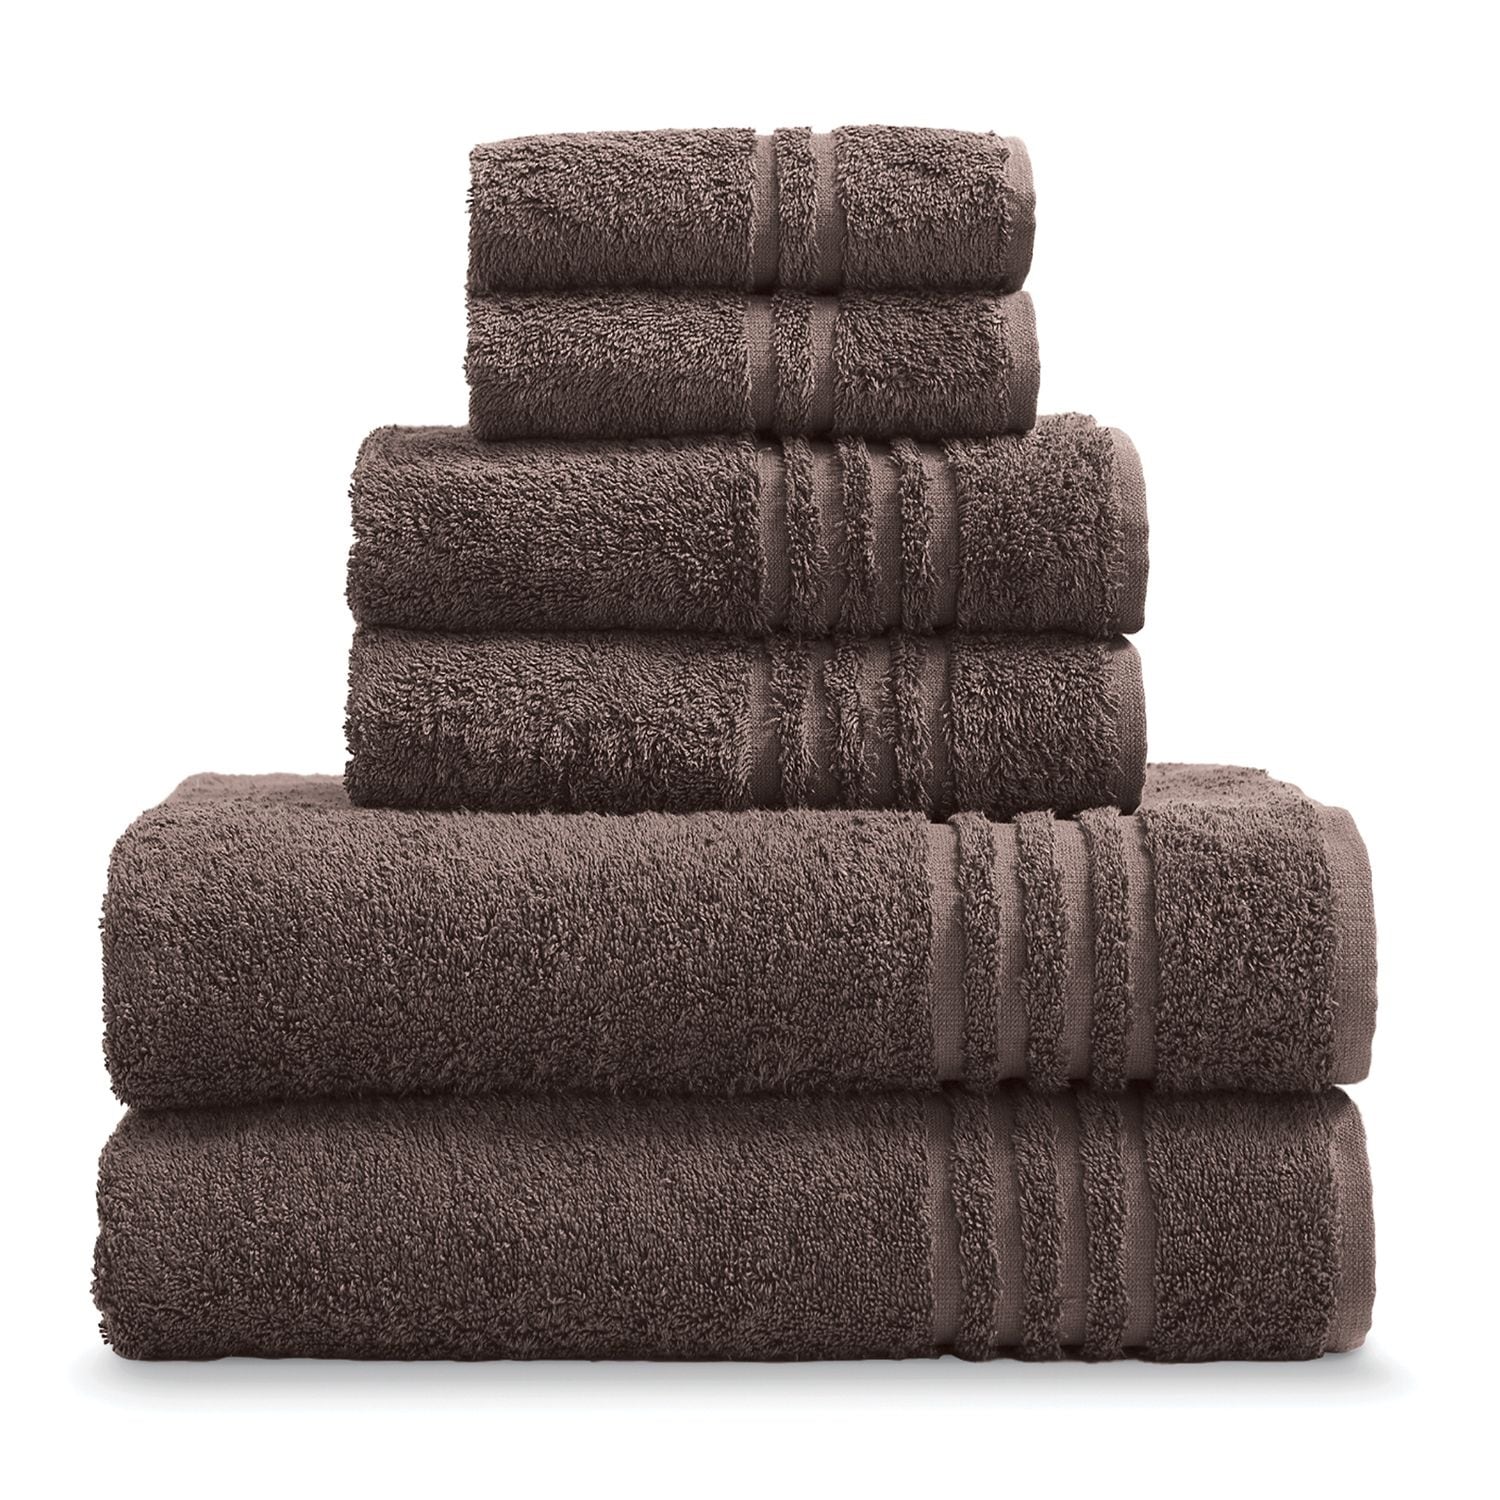 https://ak1.ostkcdn.com/images/products/is/images/direct/6ef1164757de74a644bb6f95bfcbc04b311cec31/Ella-Jayne-Turkish-Cotton-6-Piece-Ensemble-Towel-Set.jpg